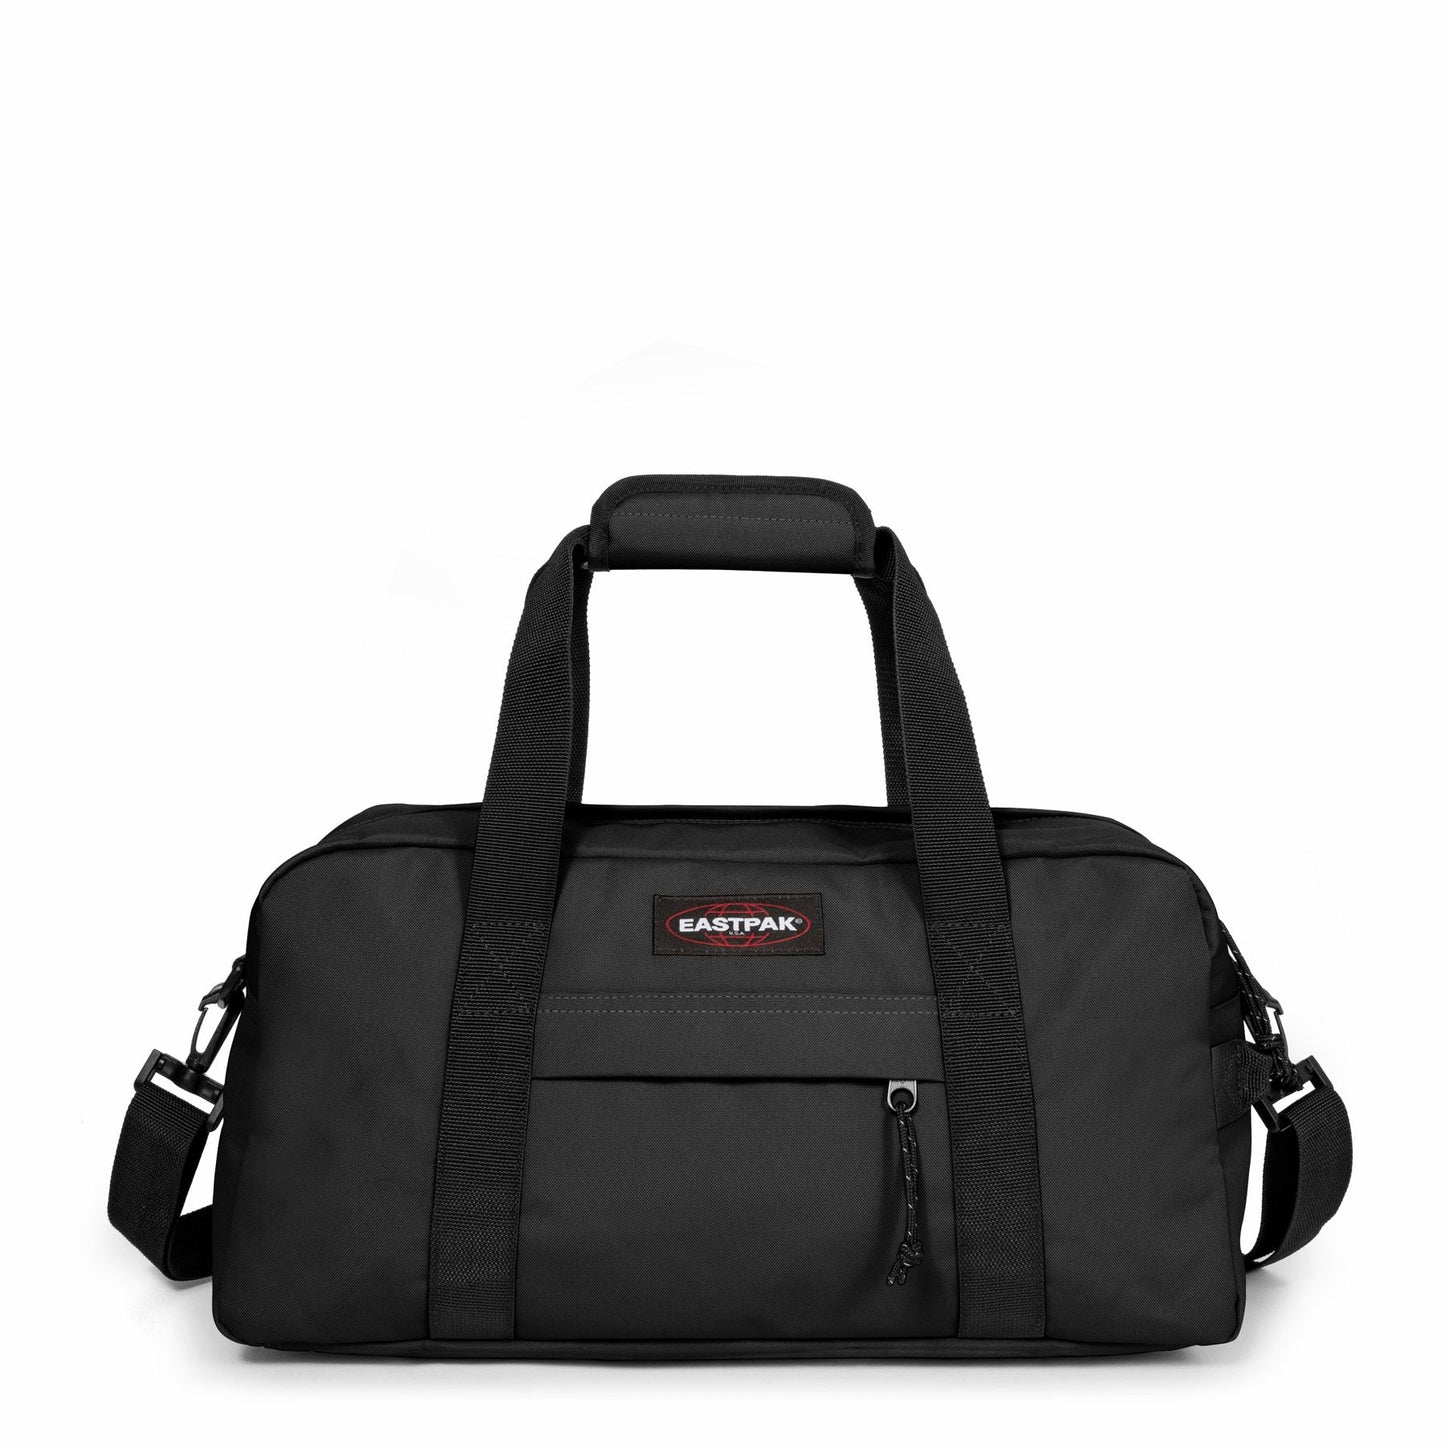 EastPak Compact Duffel Bag Black